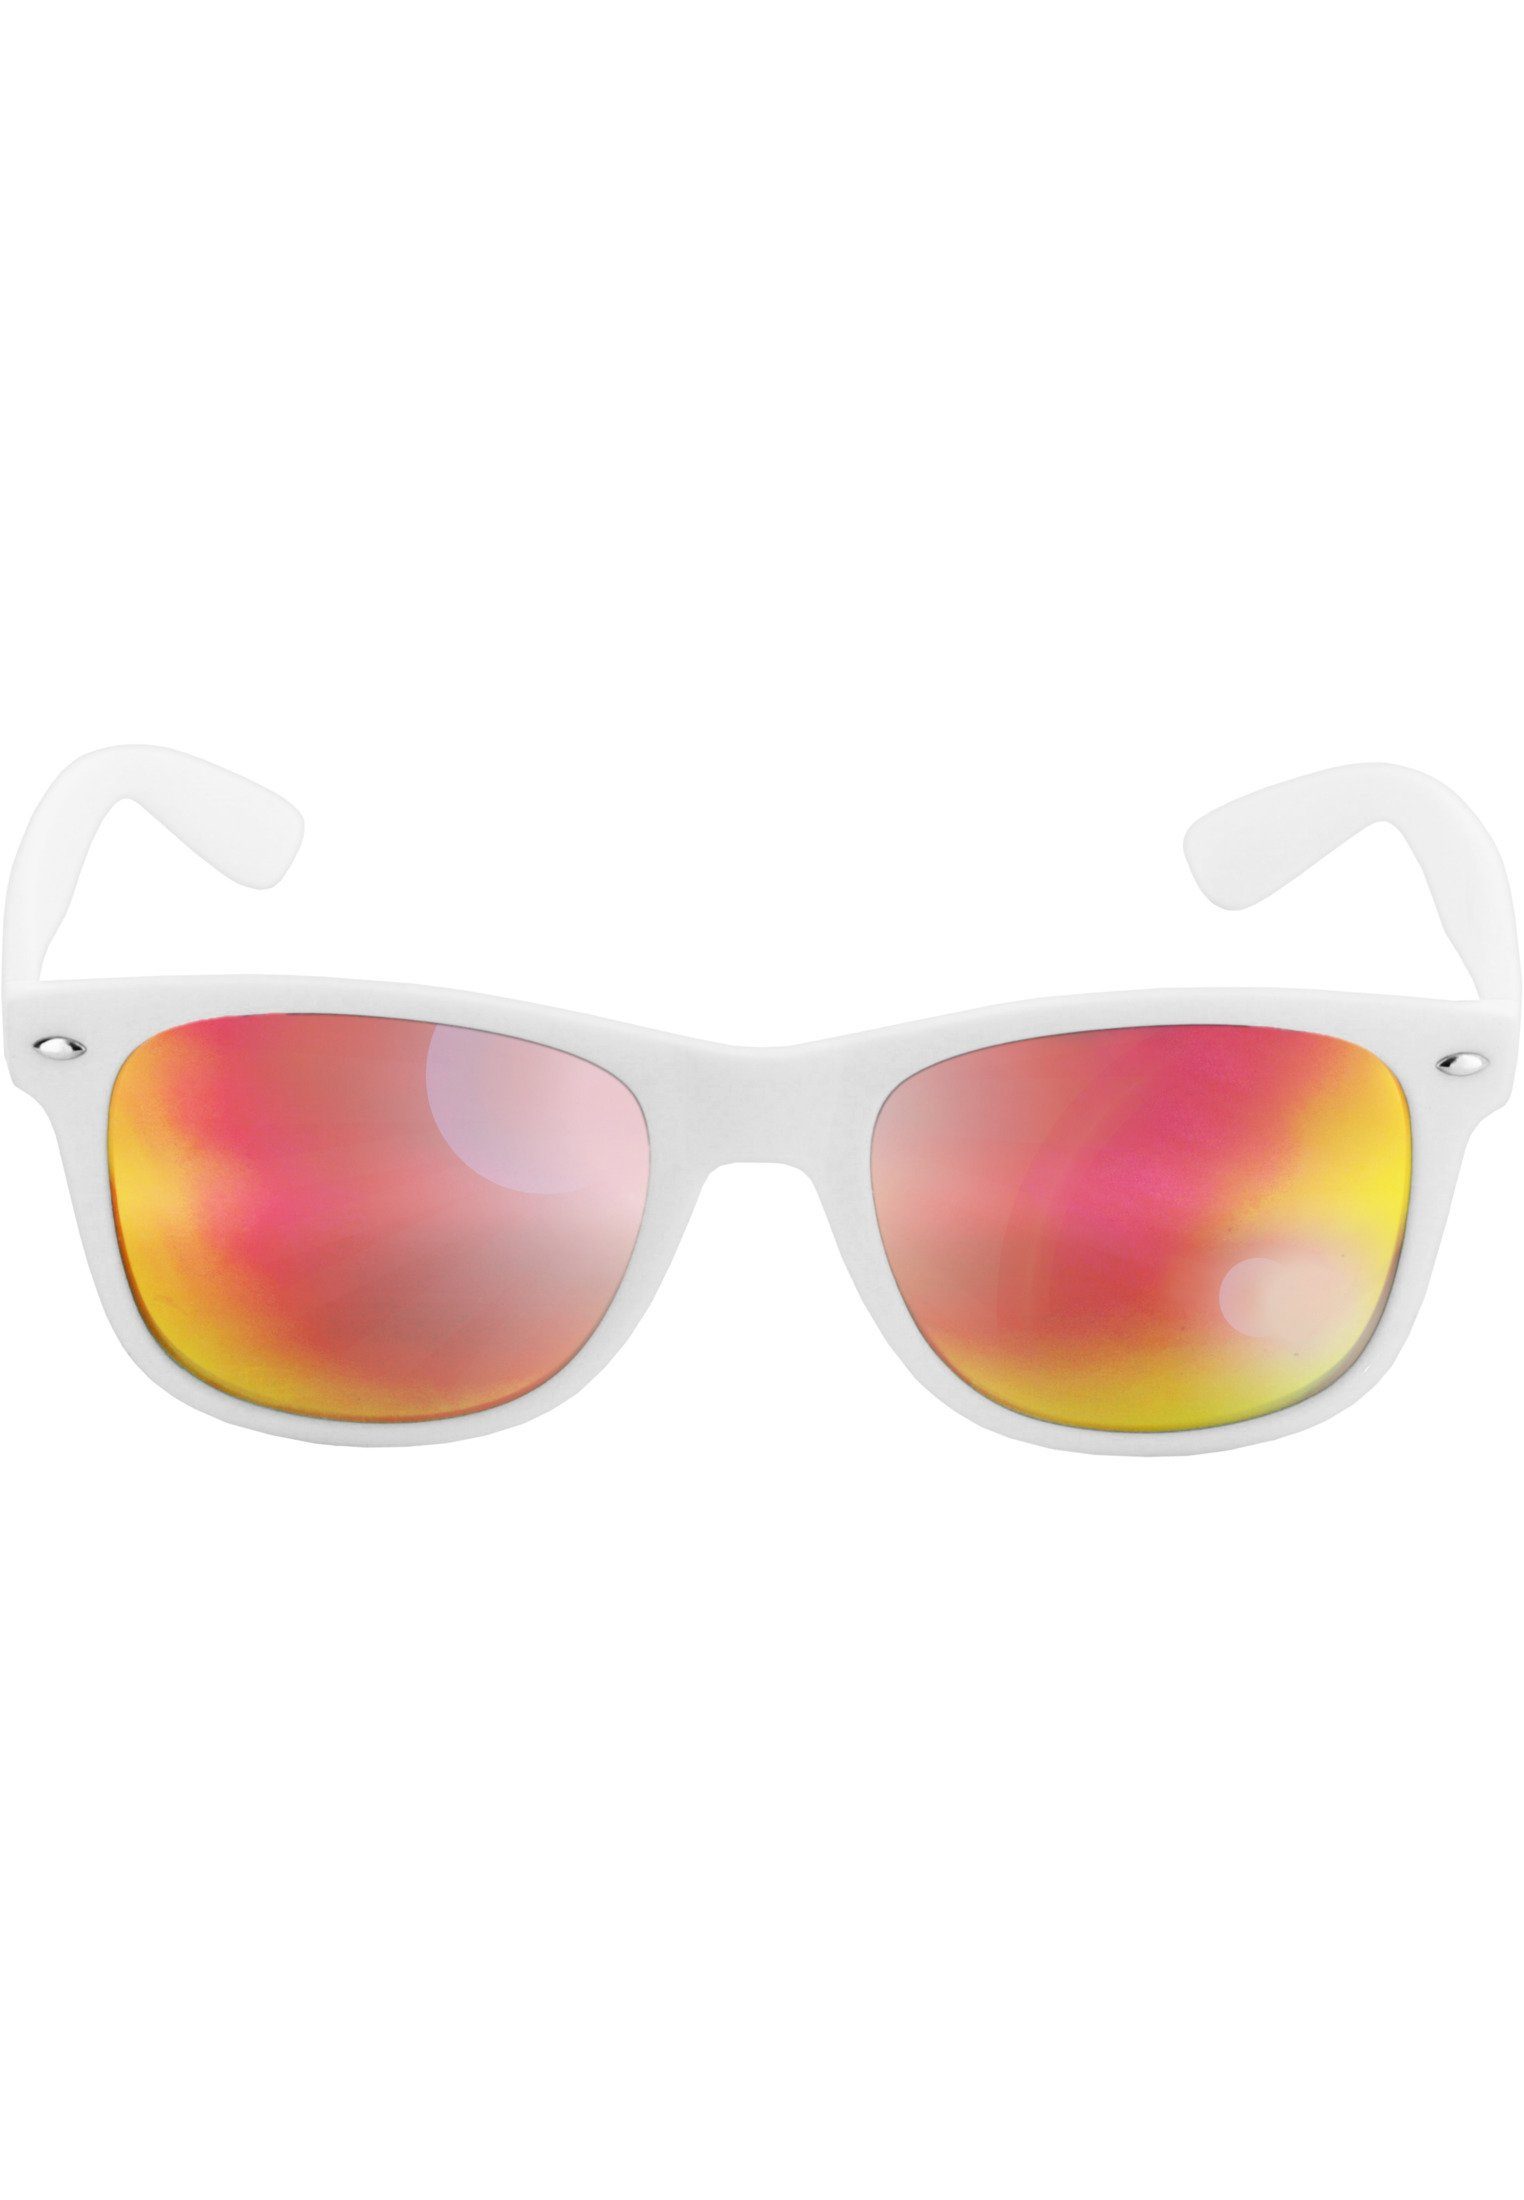 MSTRDS Sonnenbrille Accessoires Sunglasses Likoma Mirror wht/red